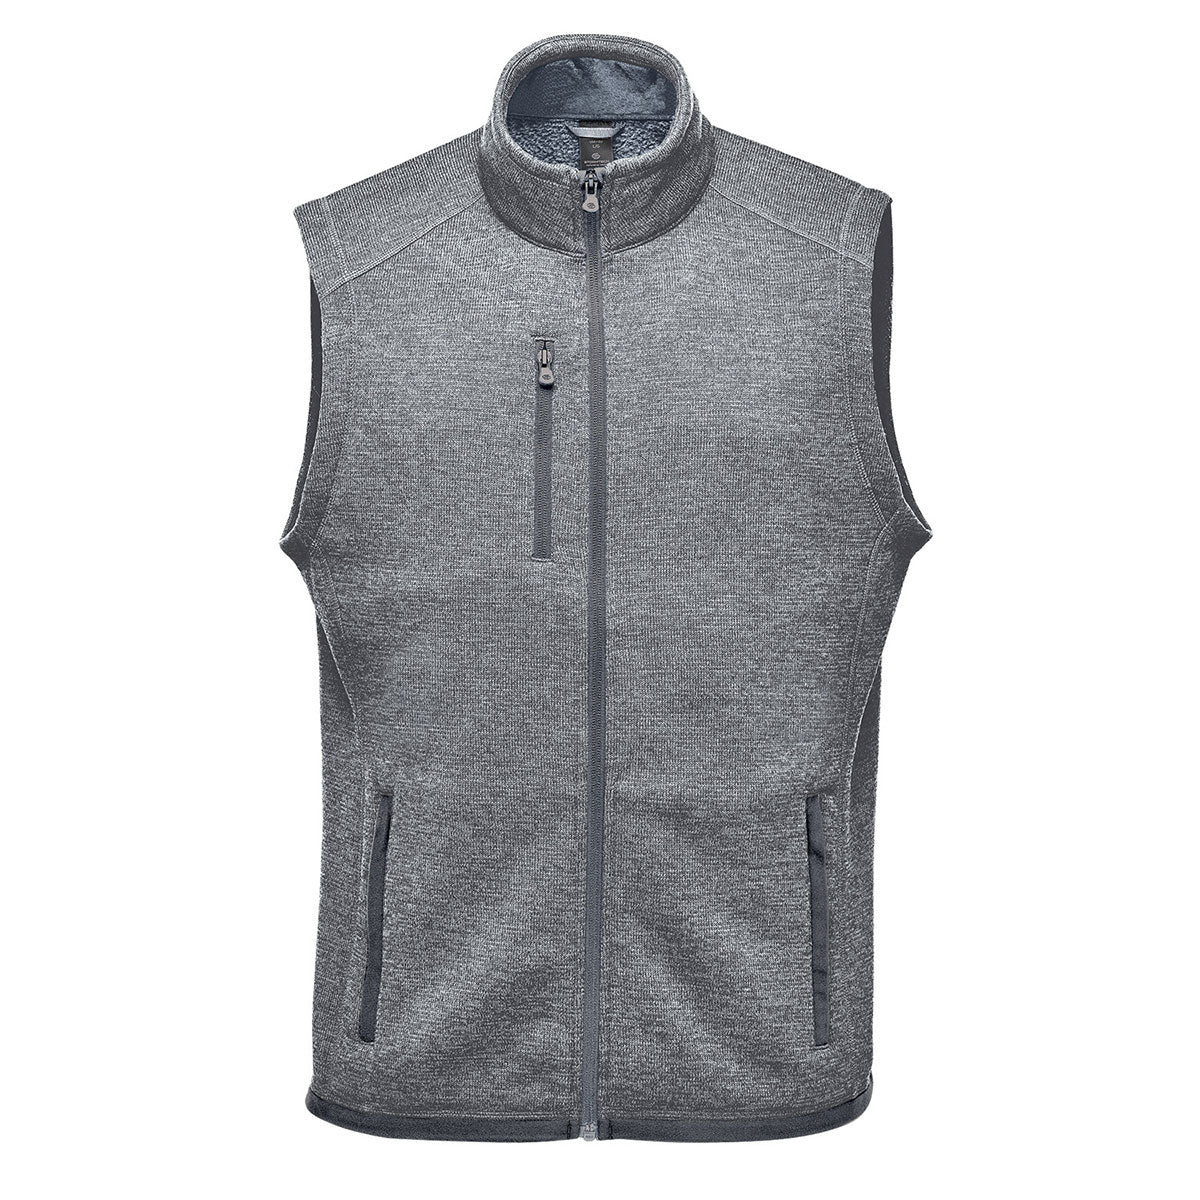 WENKOMG1 Winter Puffer Vest For Men,Lightweight Packable Ski Vest Zip Up  Sleeveless Water Resistant Outerwear